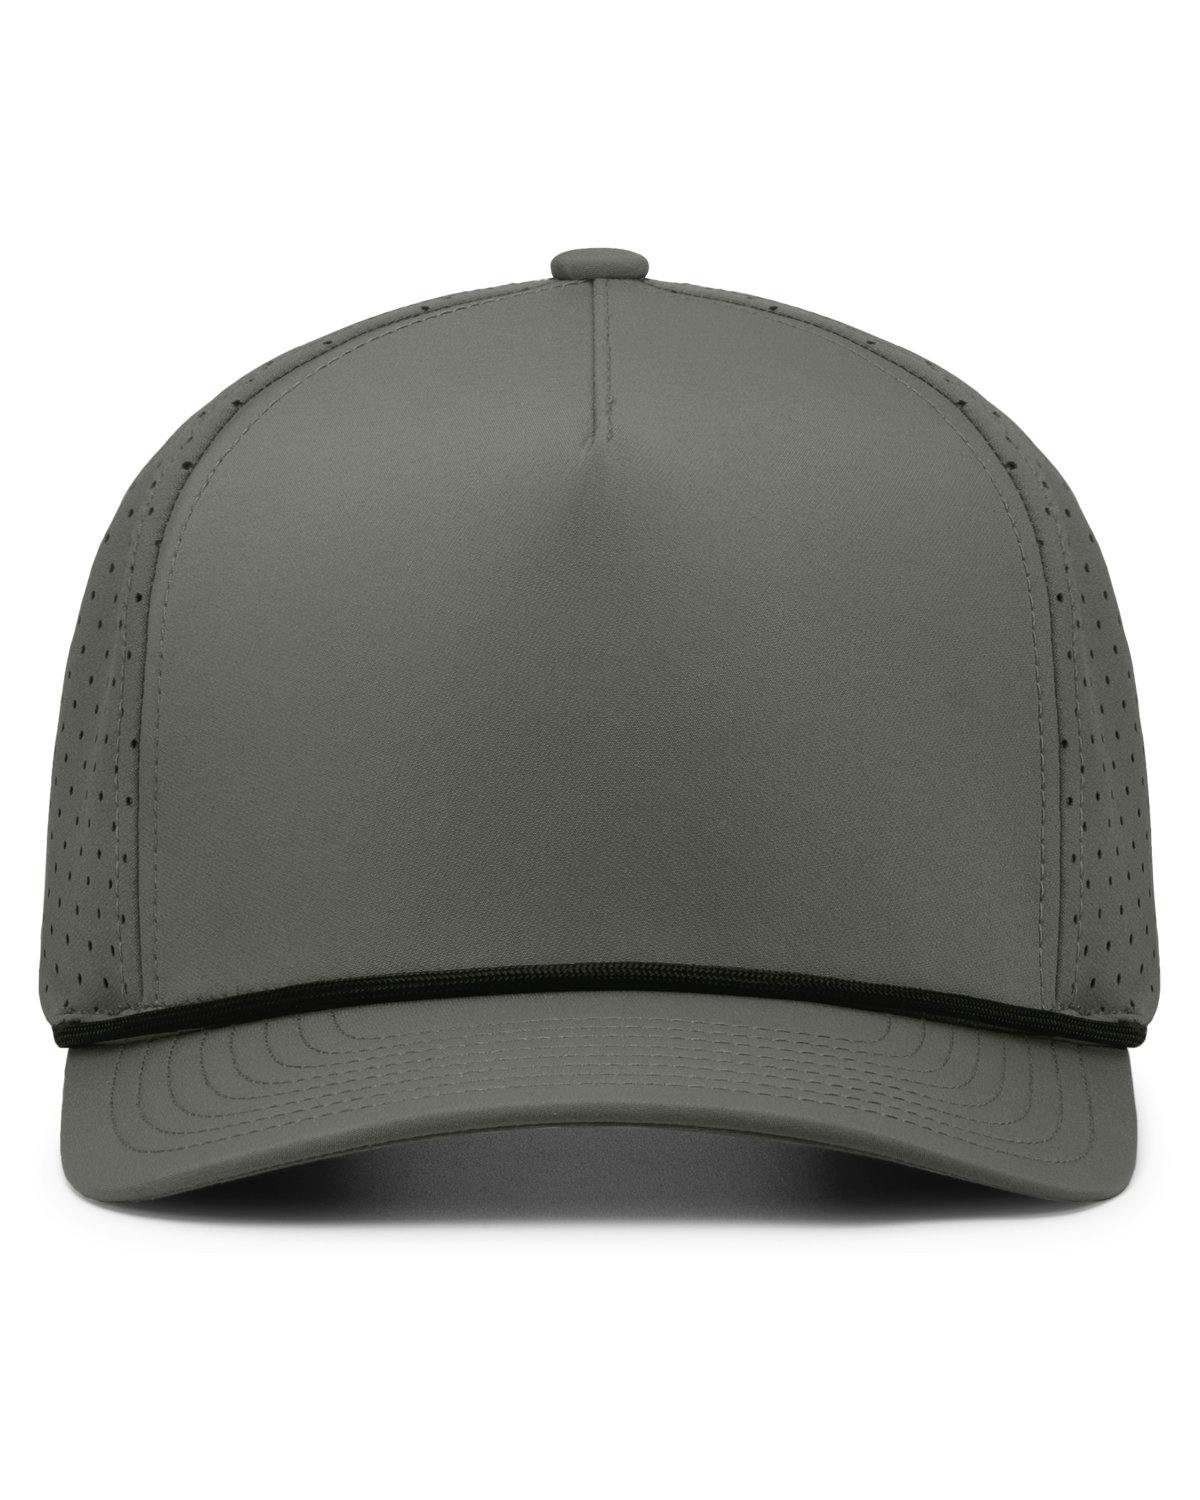 Image for Weekender Perforated Snapback Cap